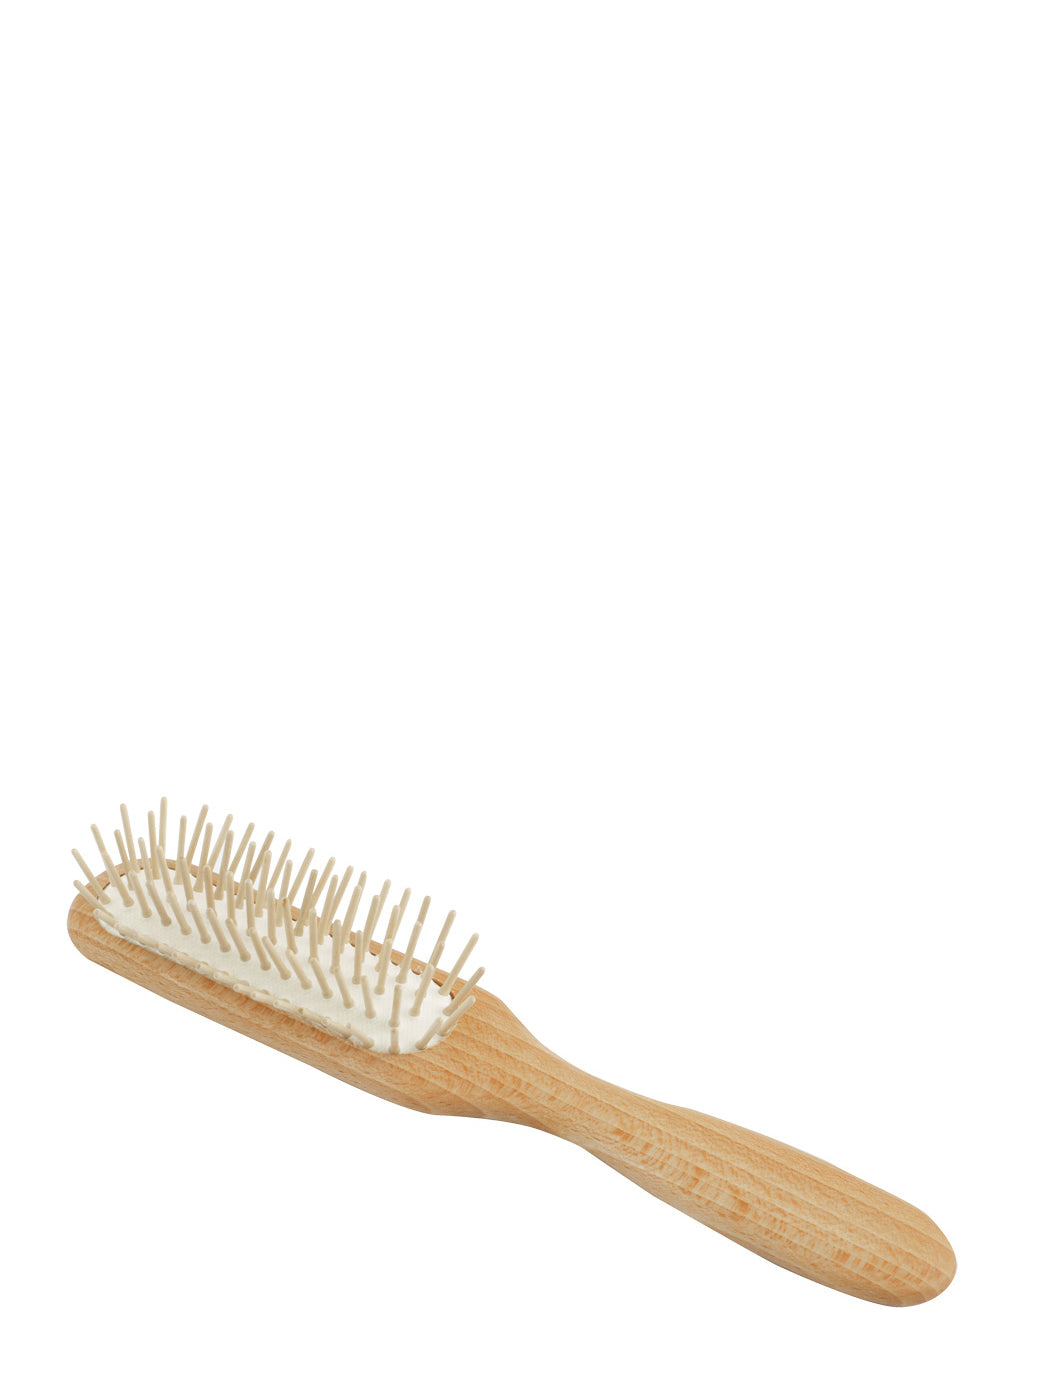 Wooden hairbrush, longish